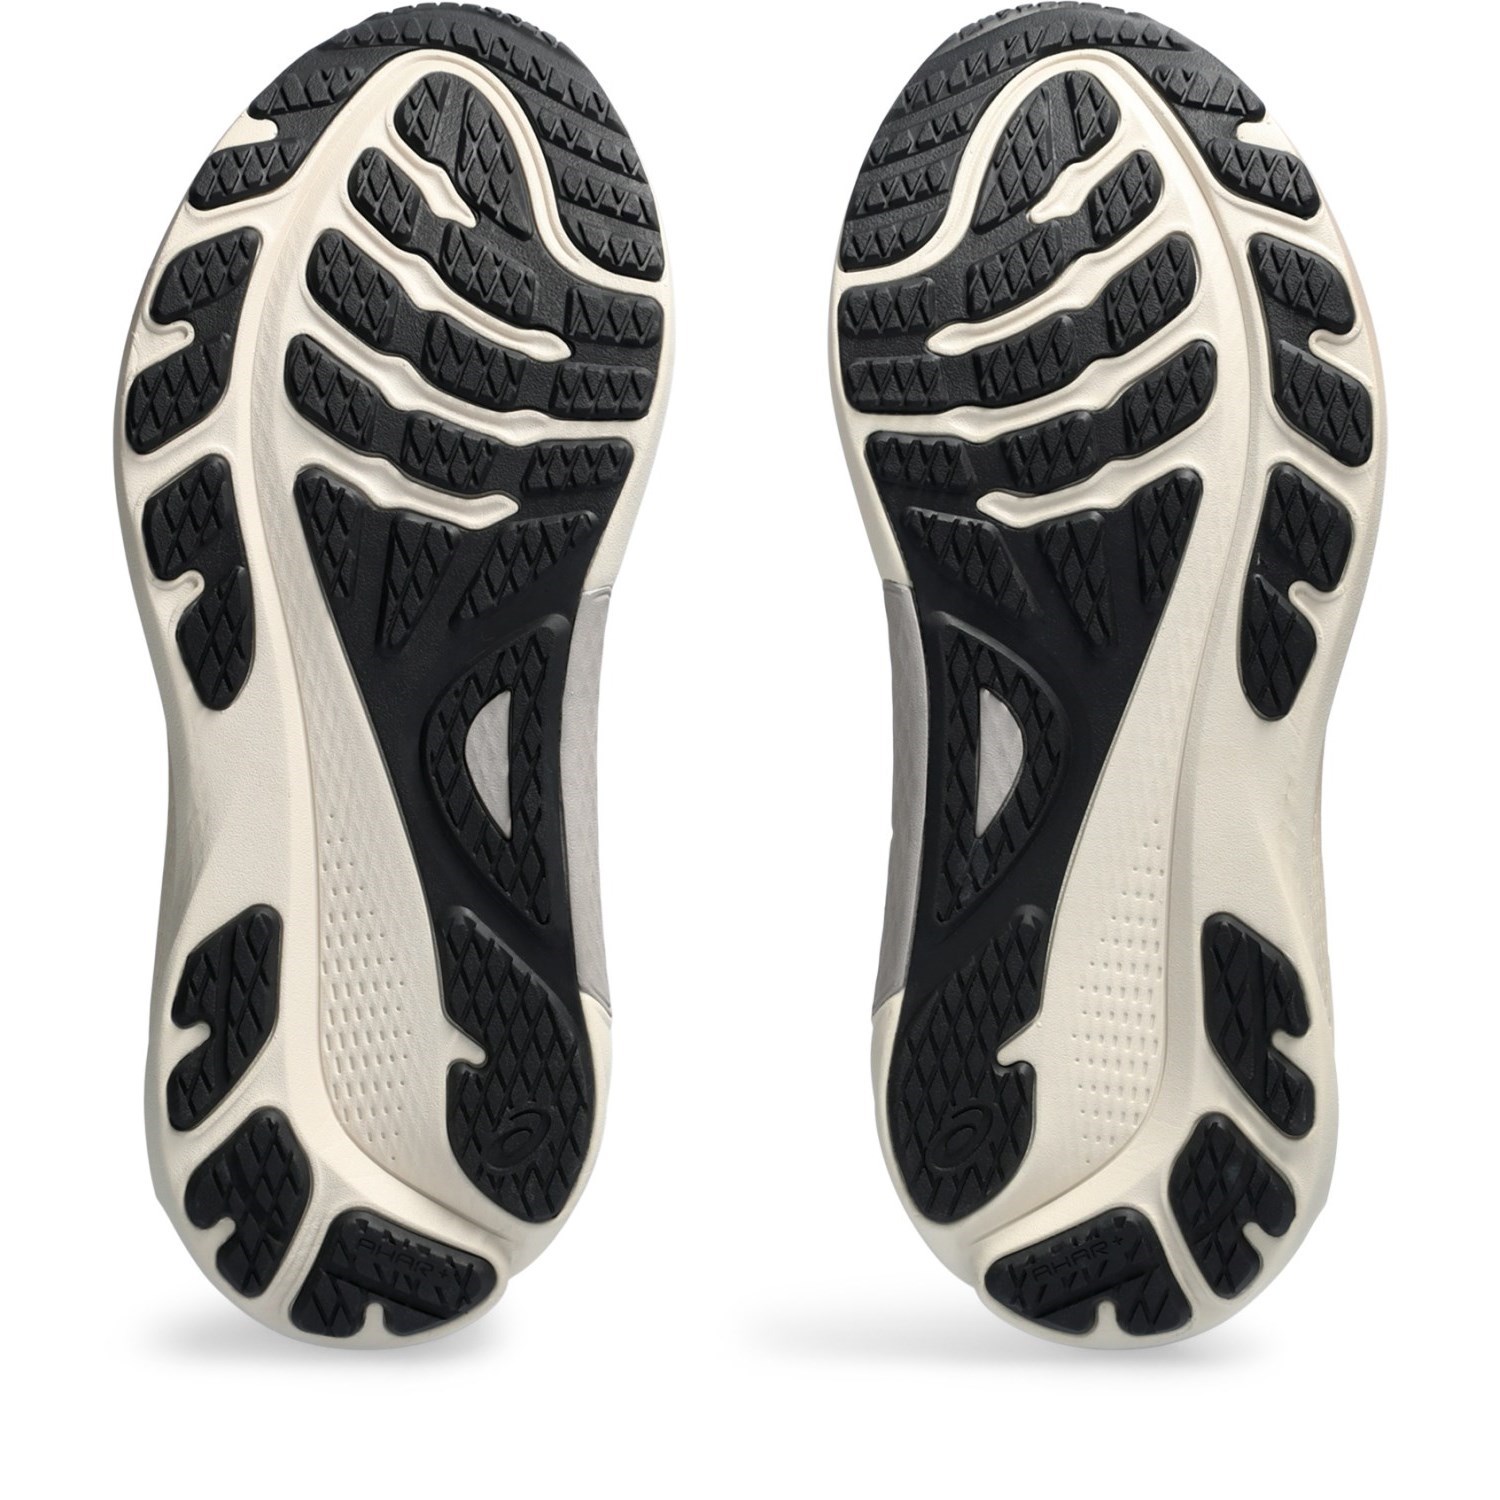 Asics Gel Kayano 30 - Mens Running Shoes - Oatmeal/Black | Sportitude